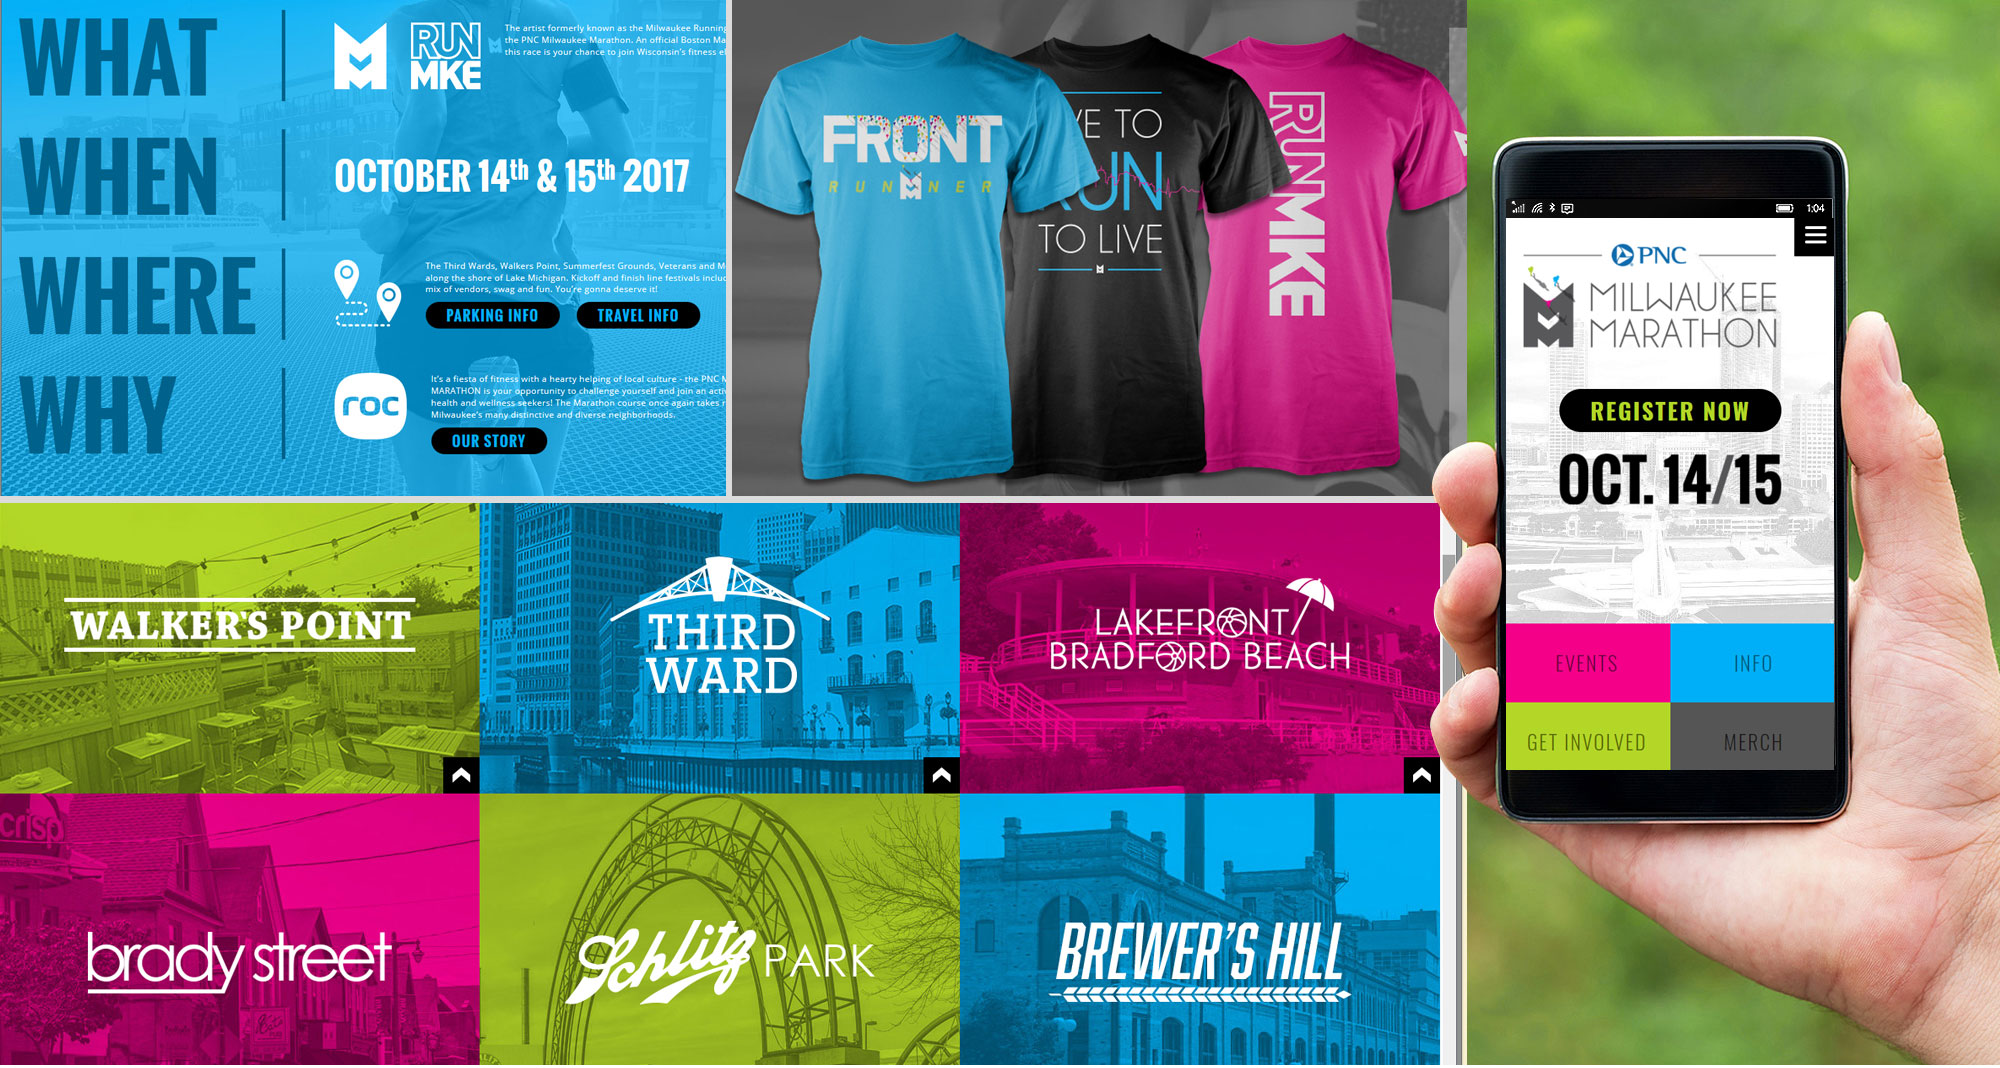 Milwaukee web marketing for the Milwaukee Marathon